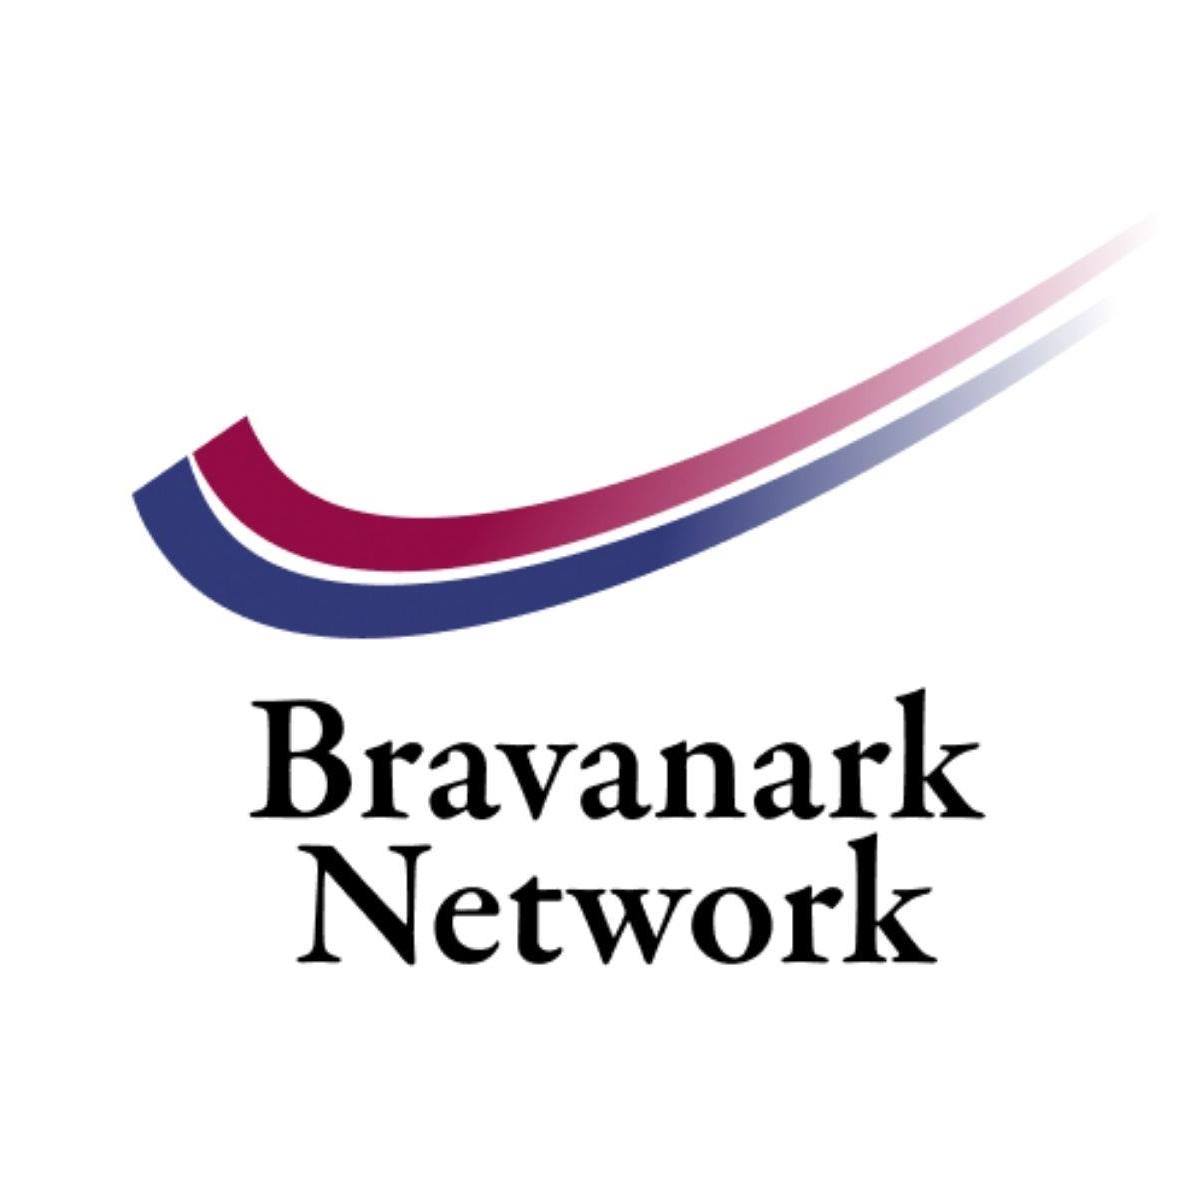 bravanark network ltd. | business service in london